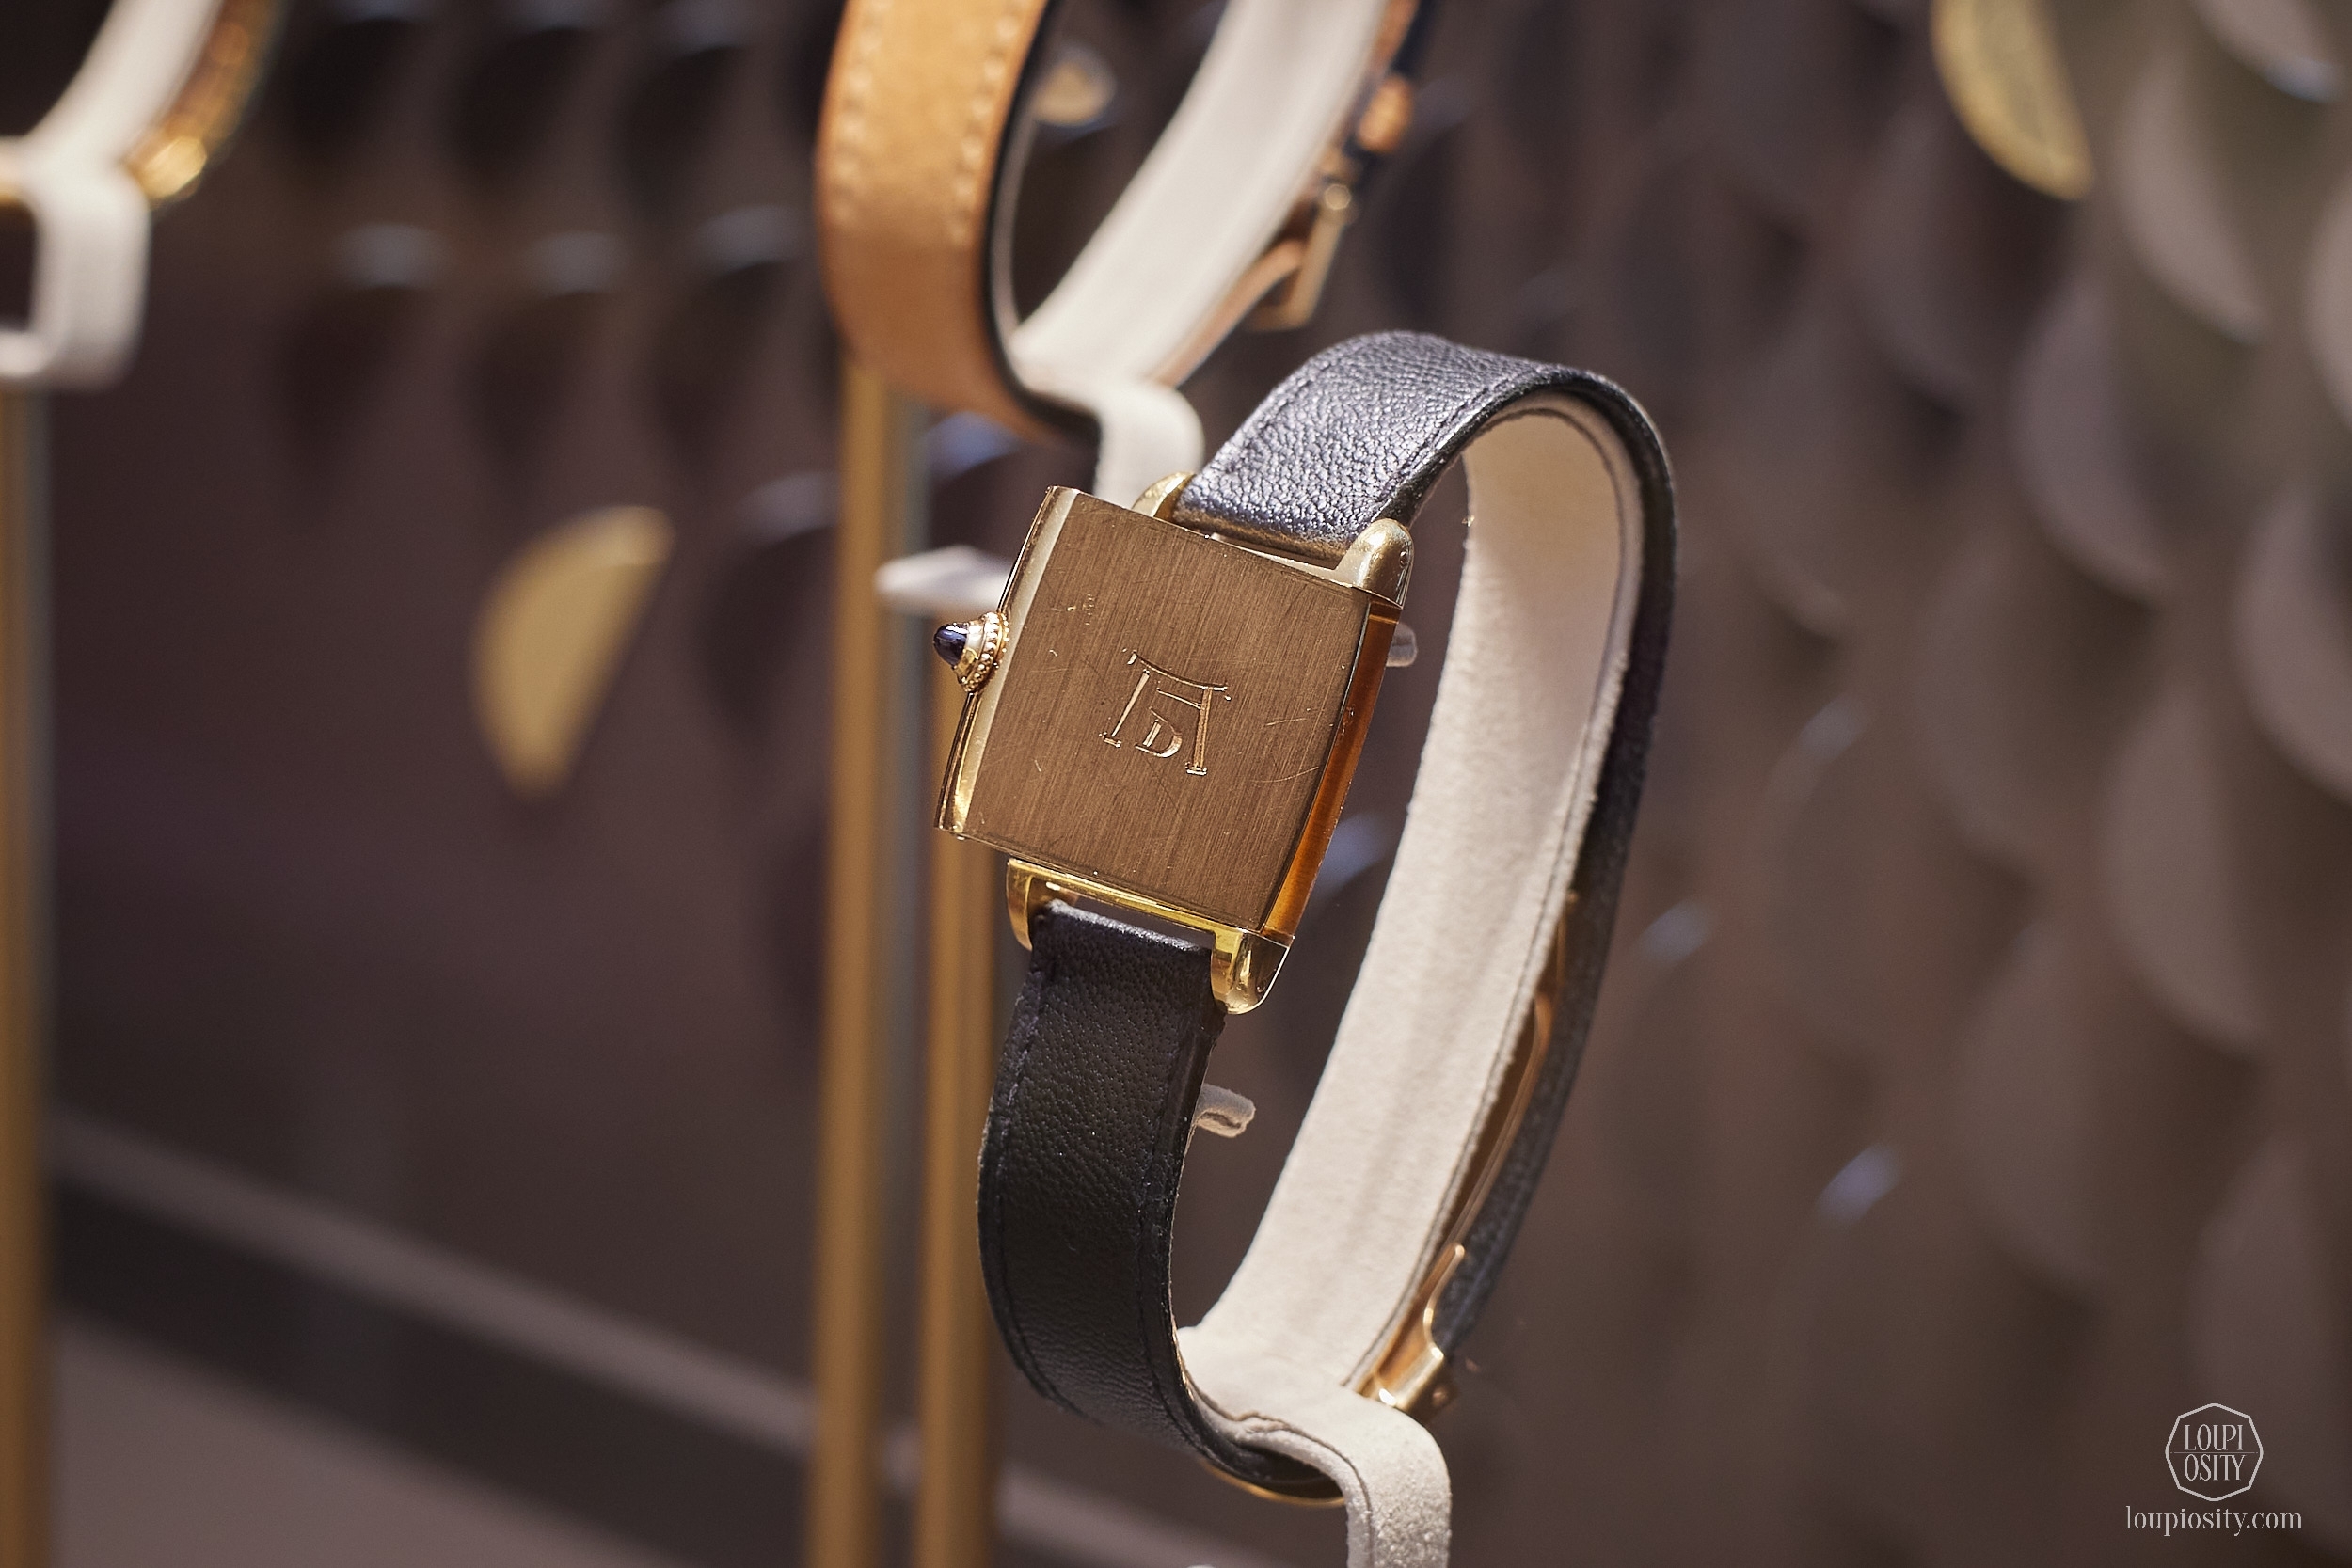 Cartier reversible watch